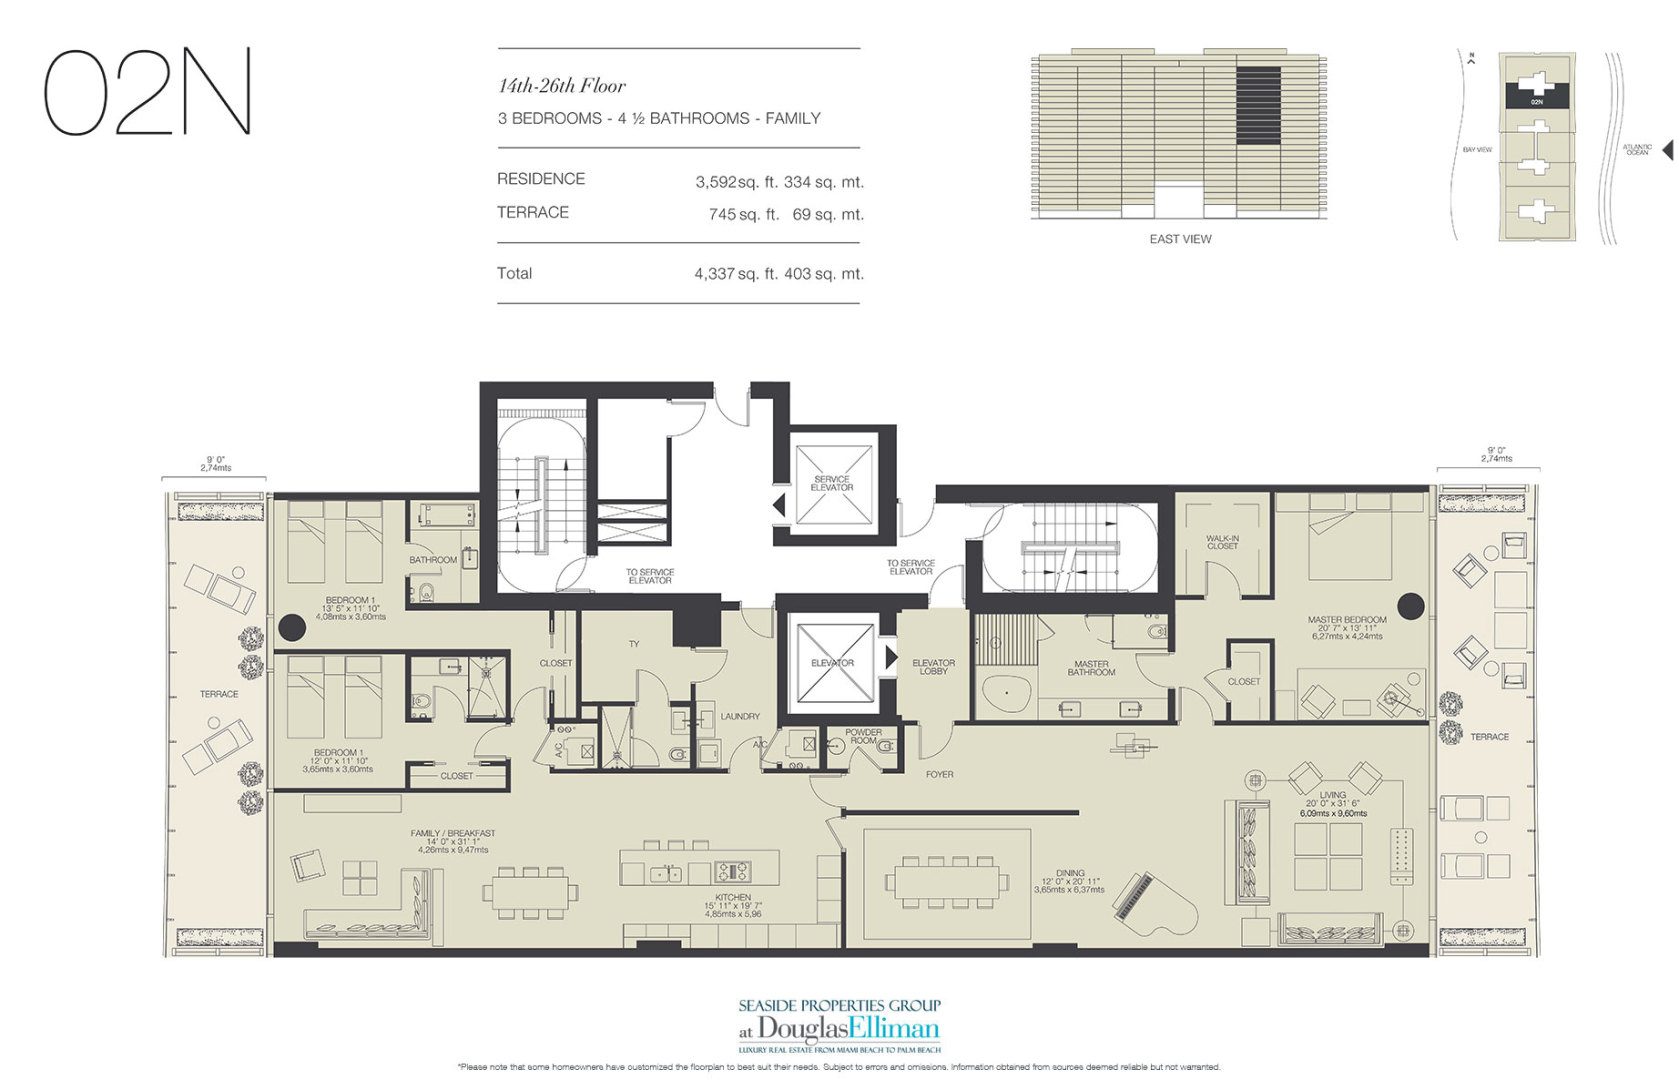 The 02N Floorplan for Oceana Bal Harbour, Luxury Oceanfront Condos in Bal Harbour, Florida 33154